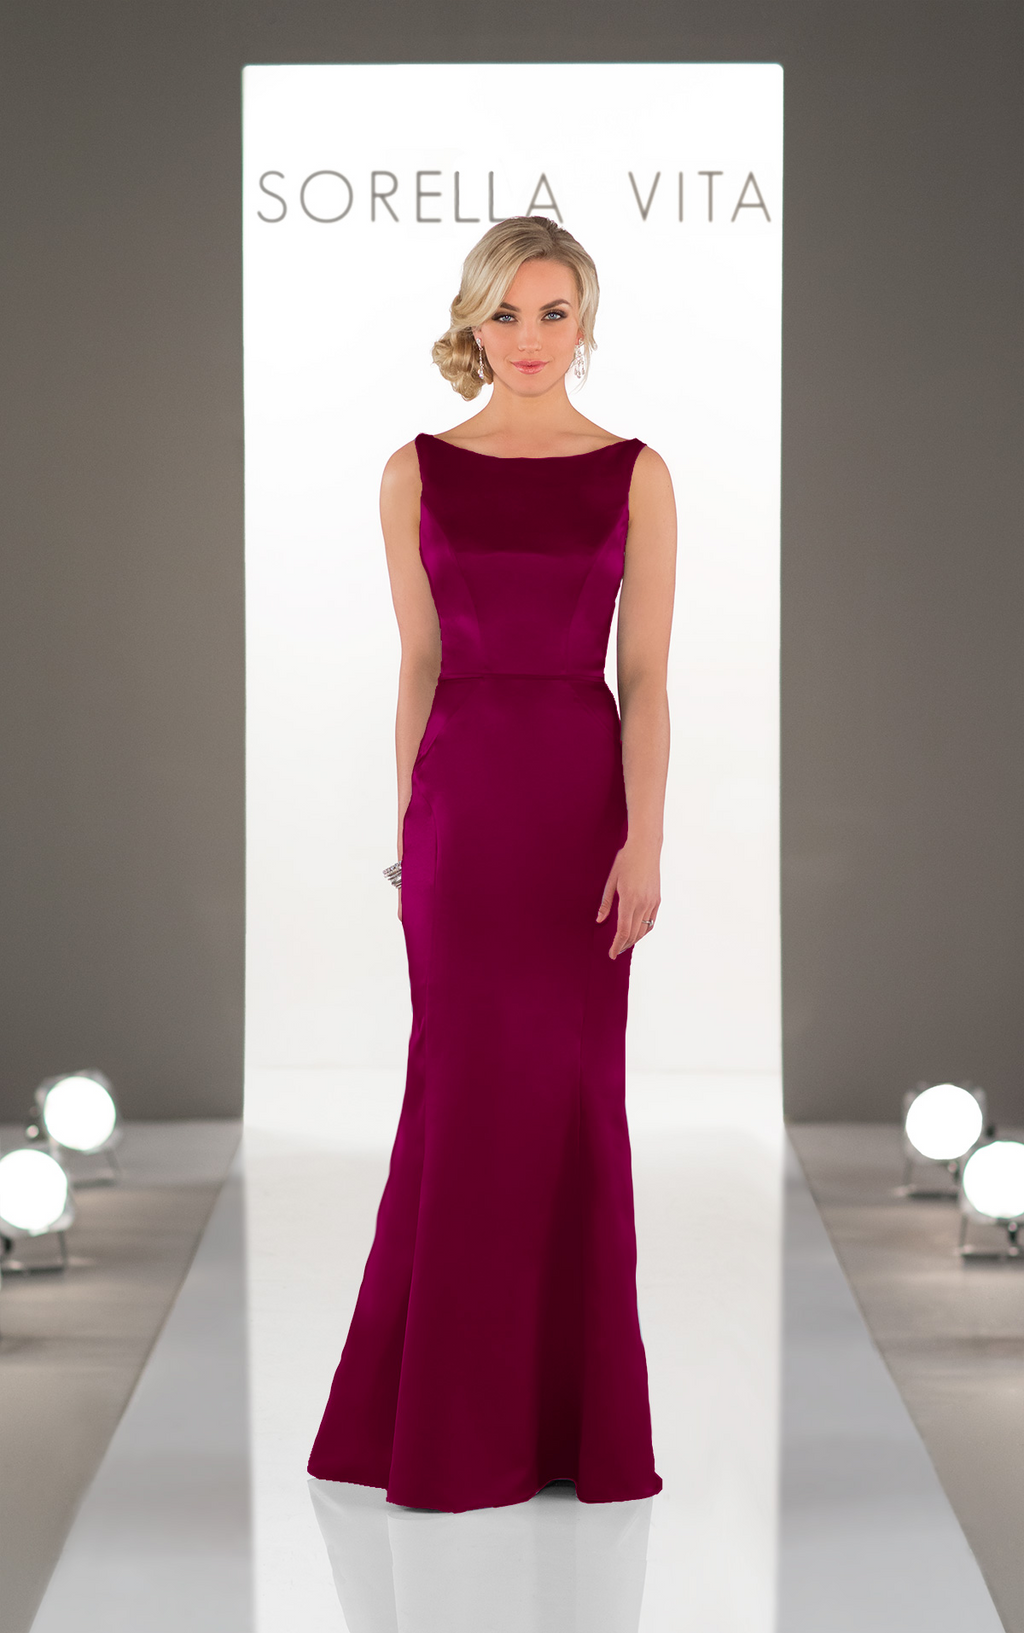 Sorella Vita Dress Style 8918 (Burgundy-Size 14) Prom, Ball., Black-tie, Bridesmaid, Pageant